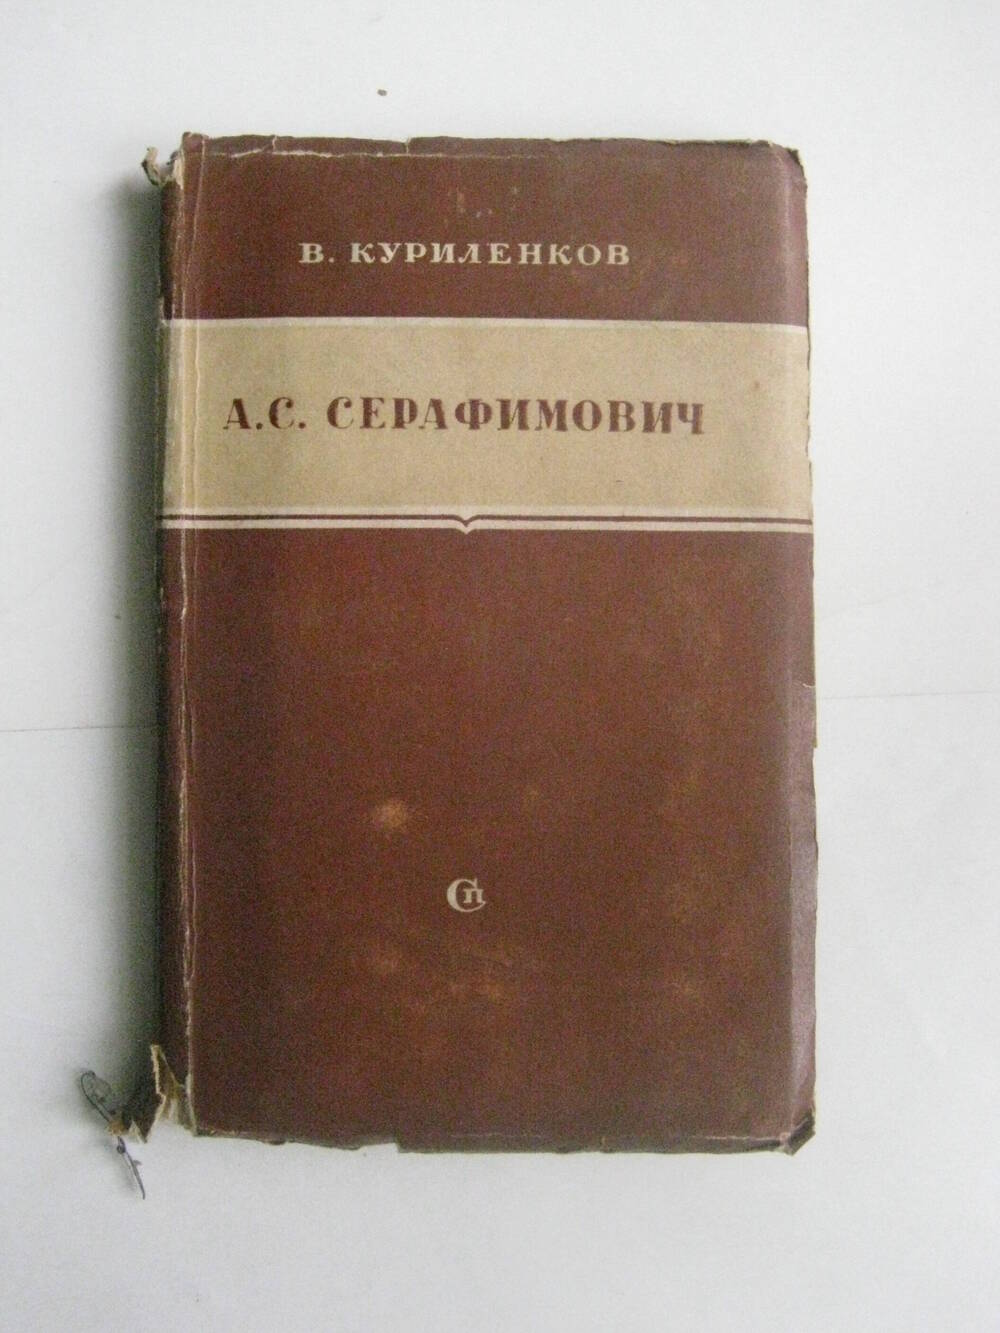 Книга. Куриленков В.  А.С. Серафимович  (Критико-биографический очерк). - М.,1950.